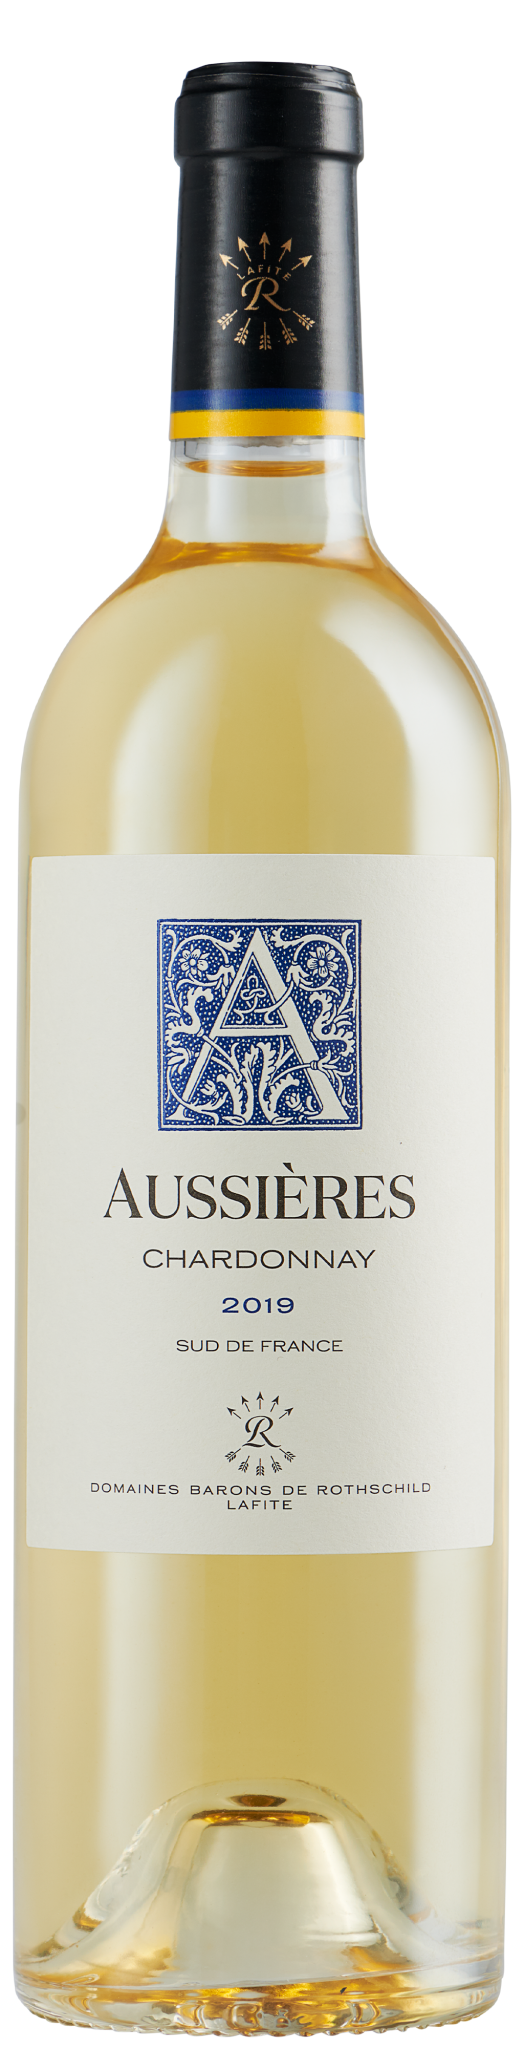 Aussières Chardonnay